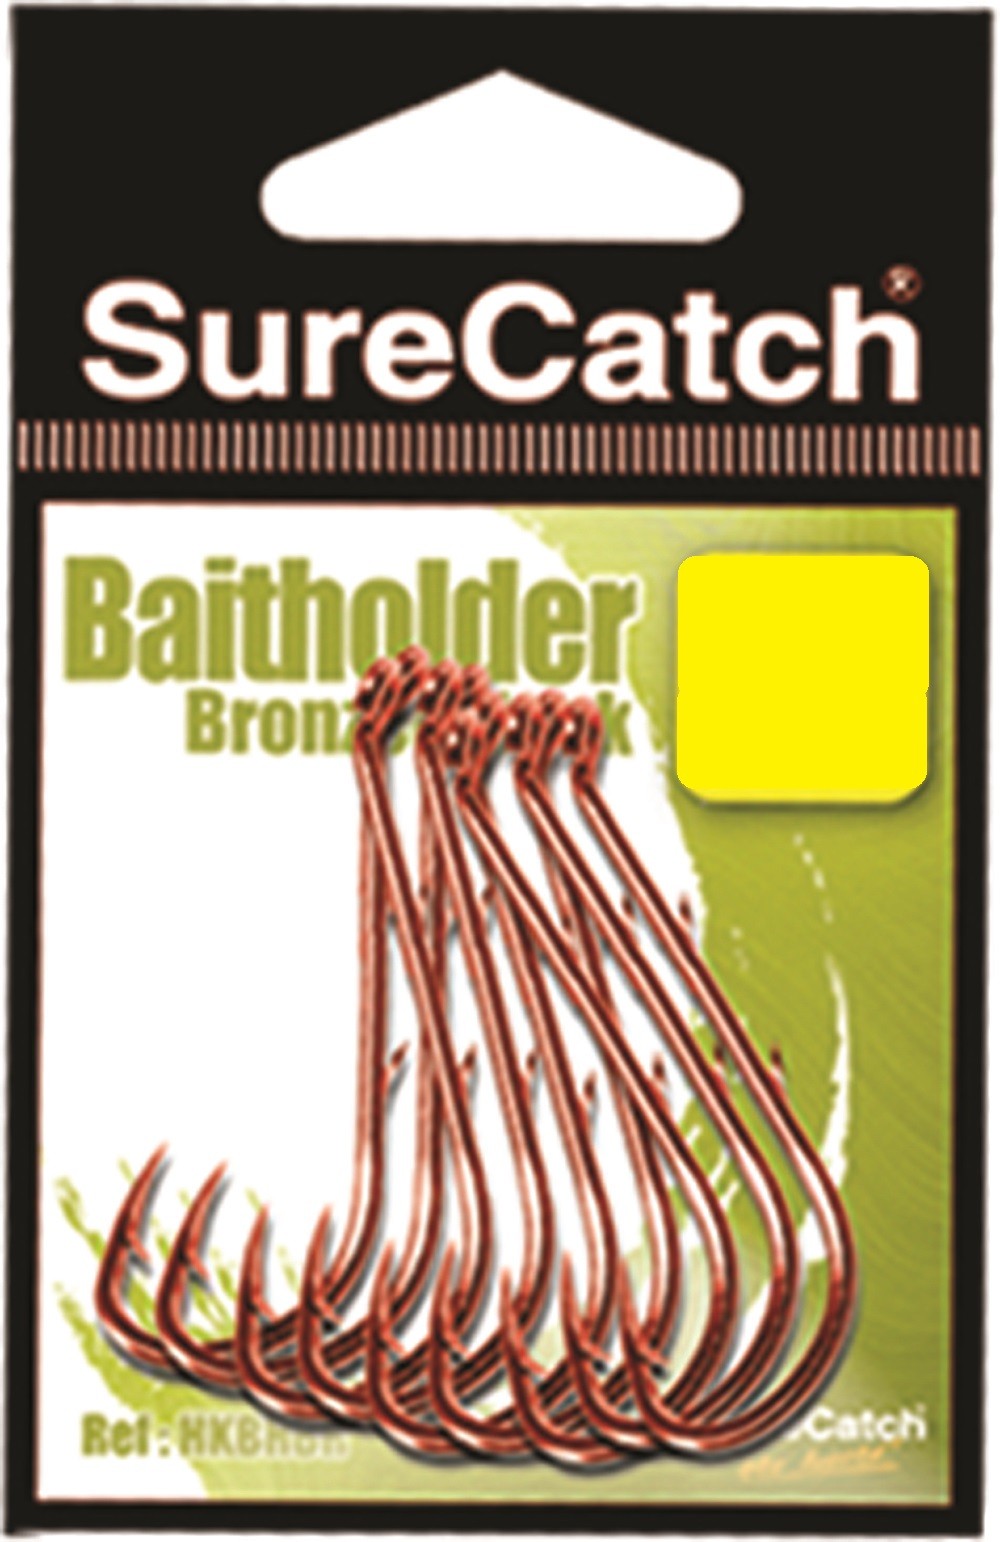 Sure Catch Bronze Baitholder Hook (6 per Pack) - Size 3/0